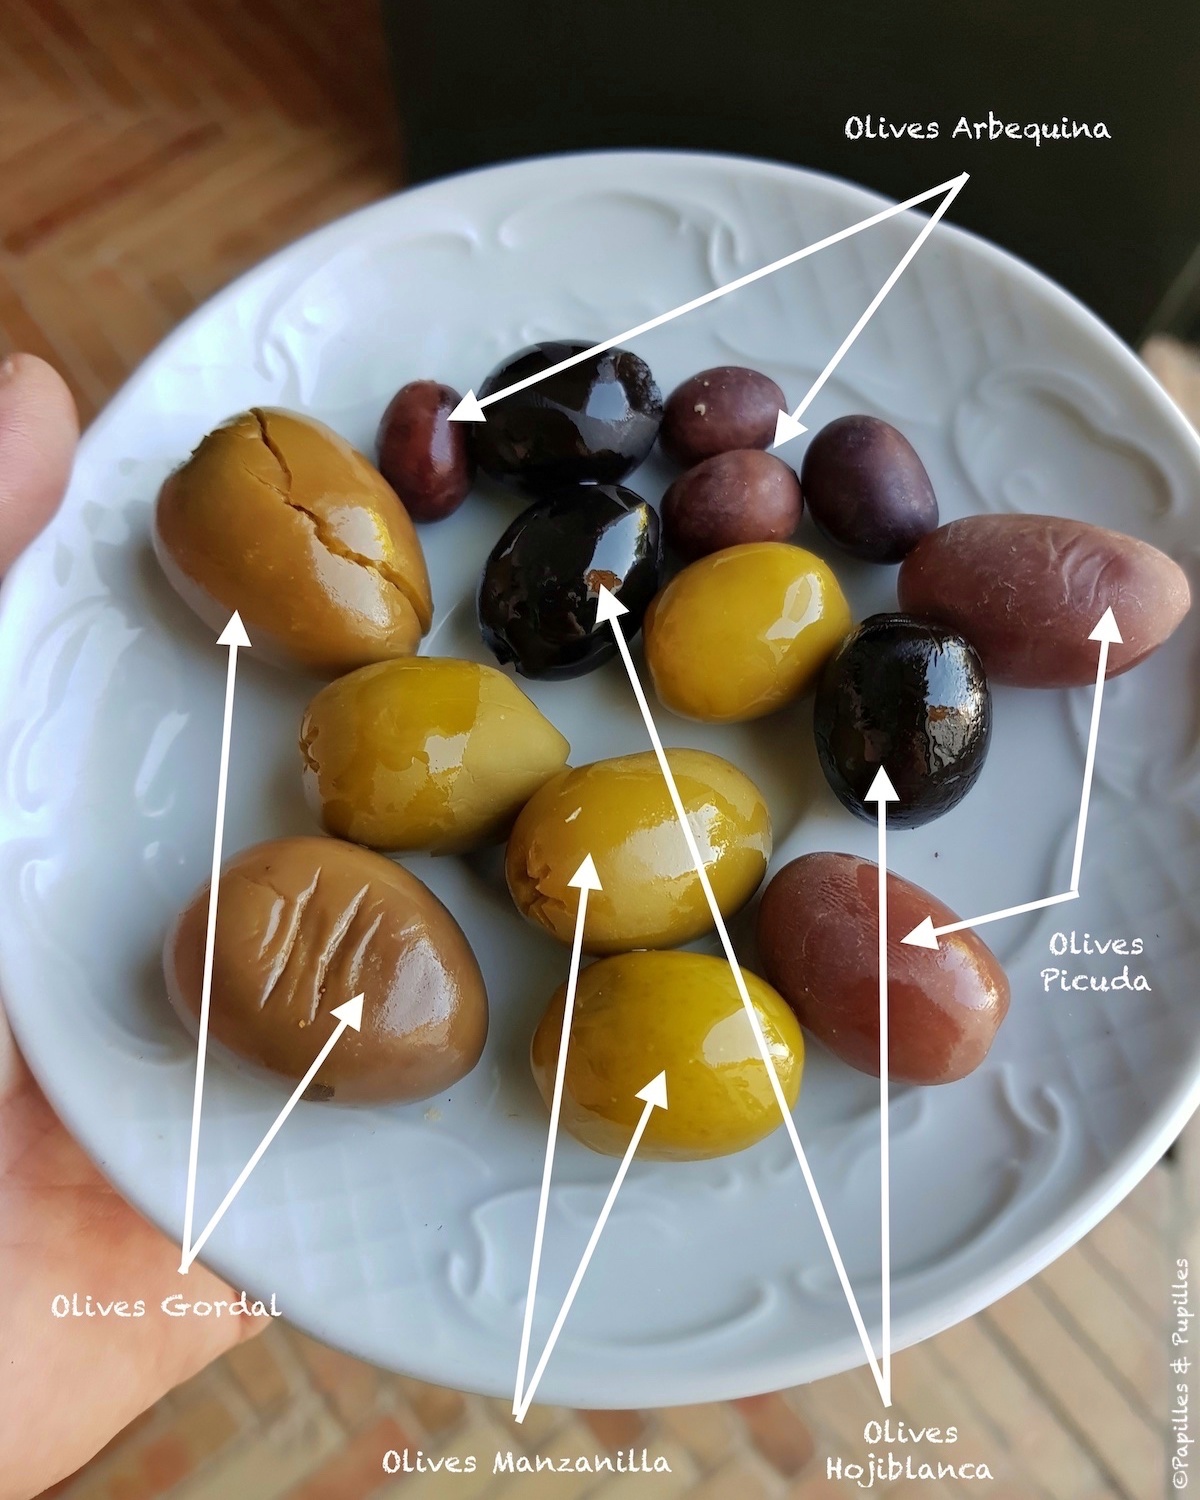 Les Différentes variétés d'olives